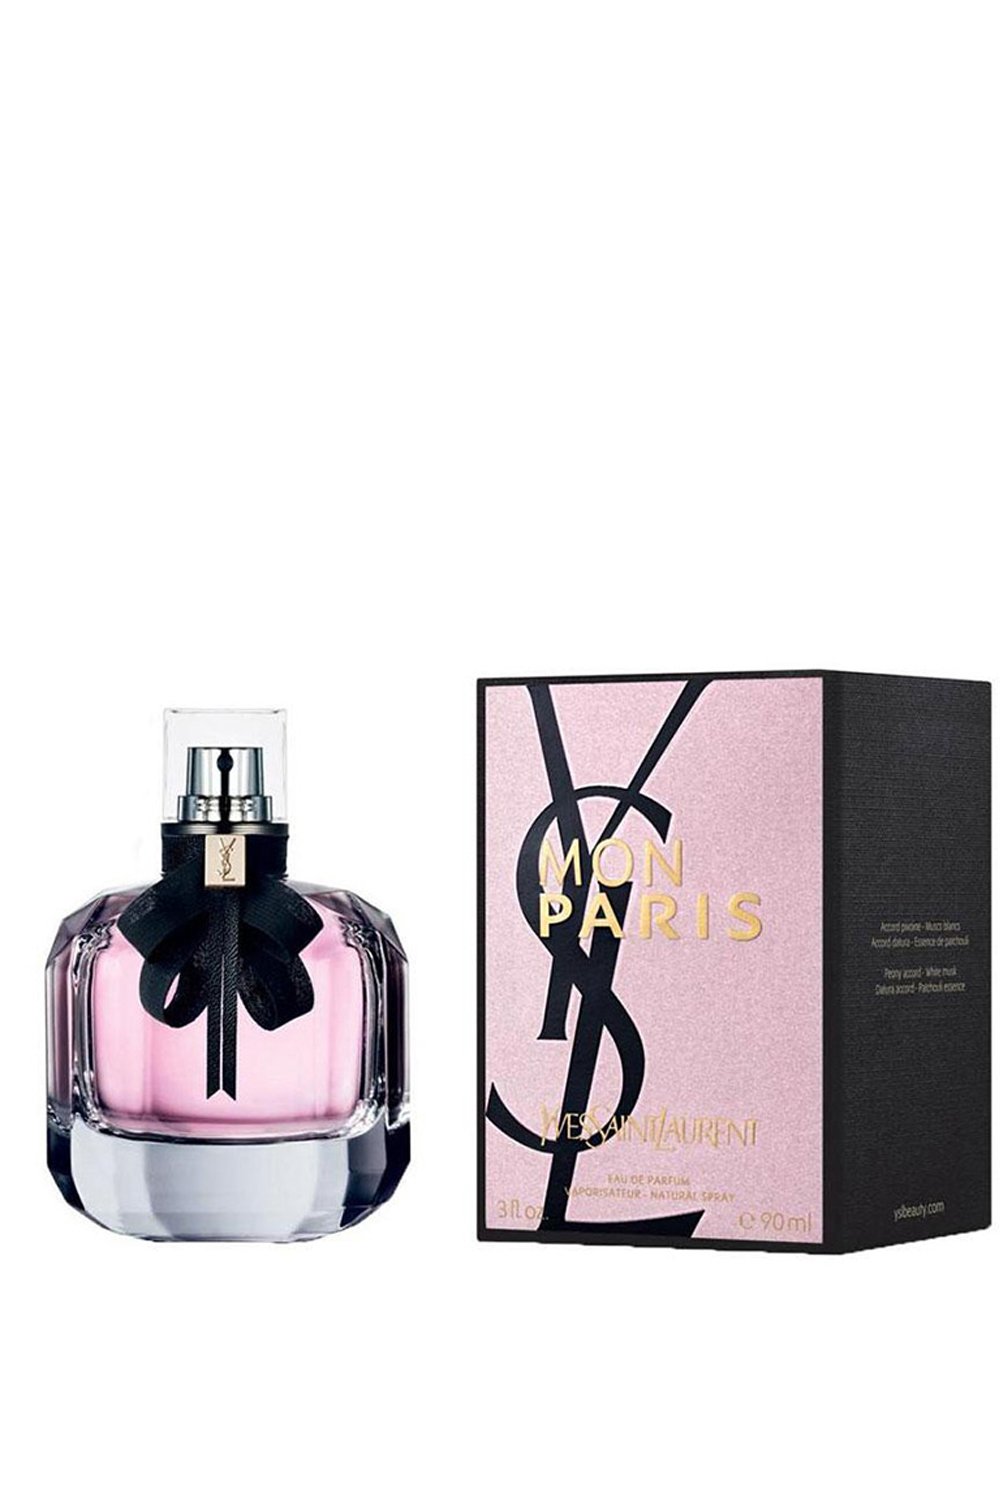 Yves Saint Laurent Mon Paris Edp 90 Ml Kadın Parfüm 